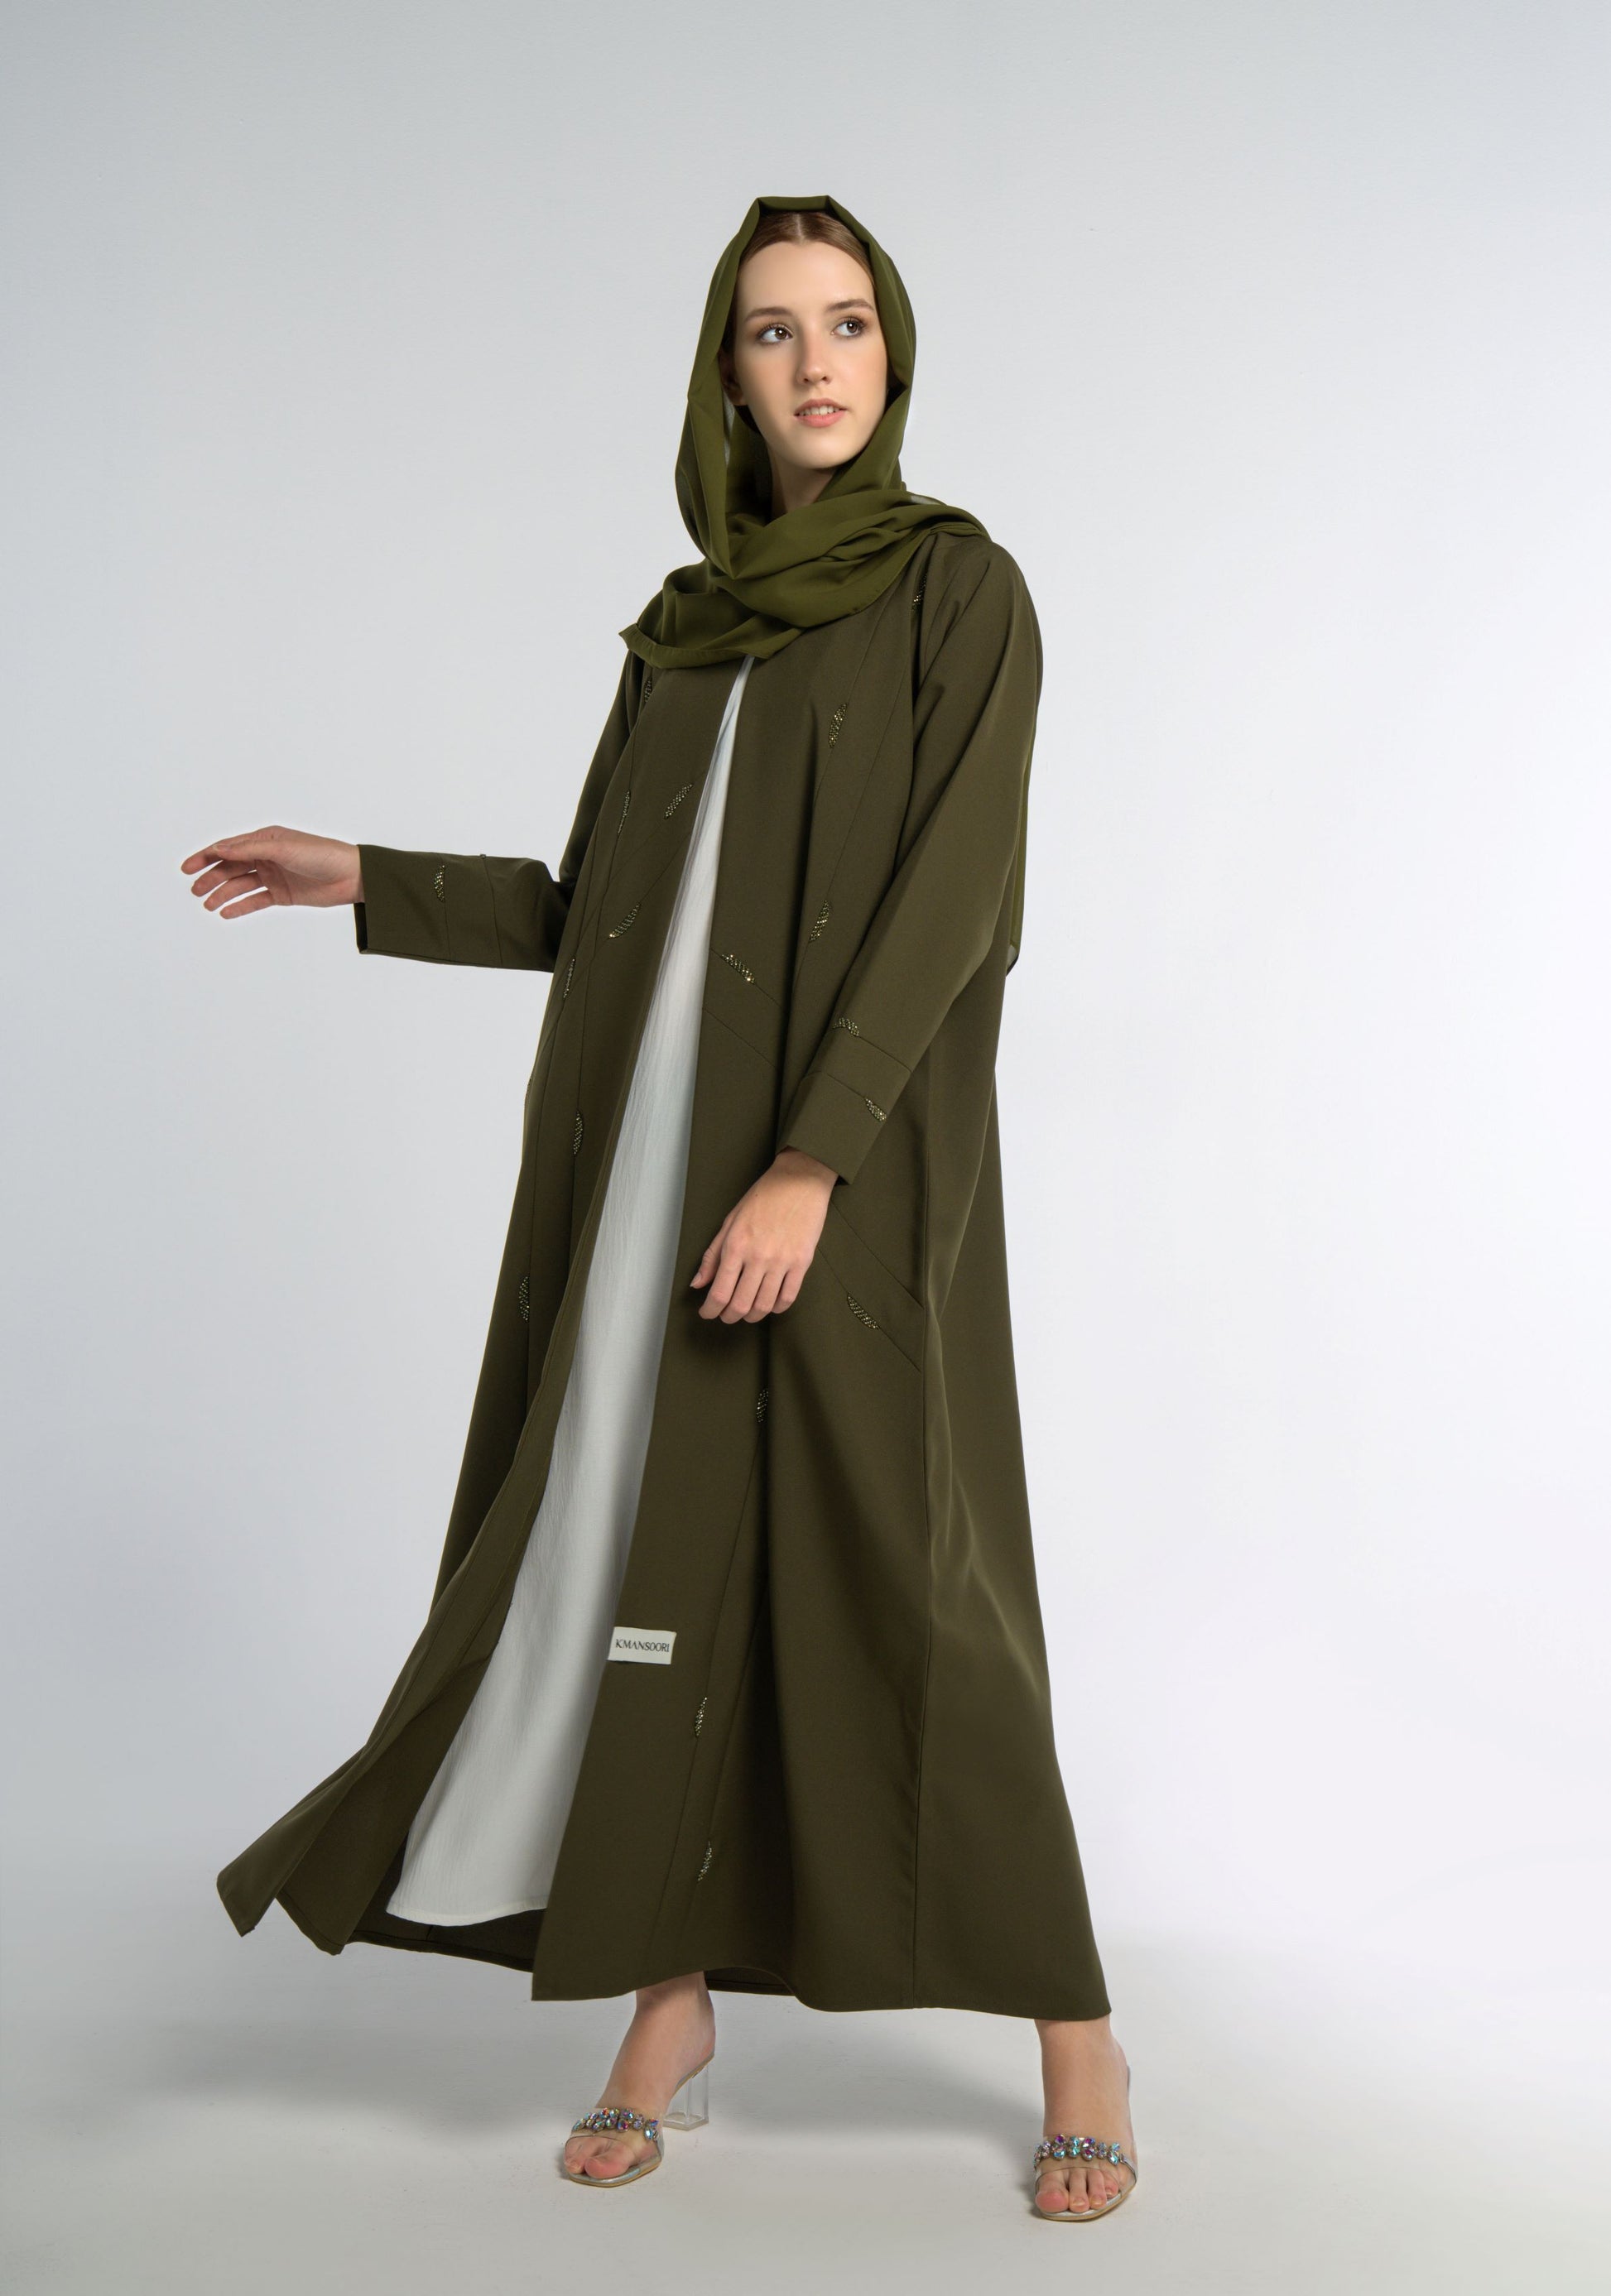 Girl wearing green colored V-neck abaya with elegant line-patterned beaded embellishments.